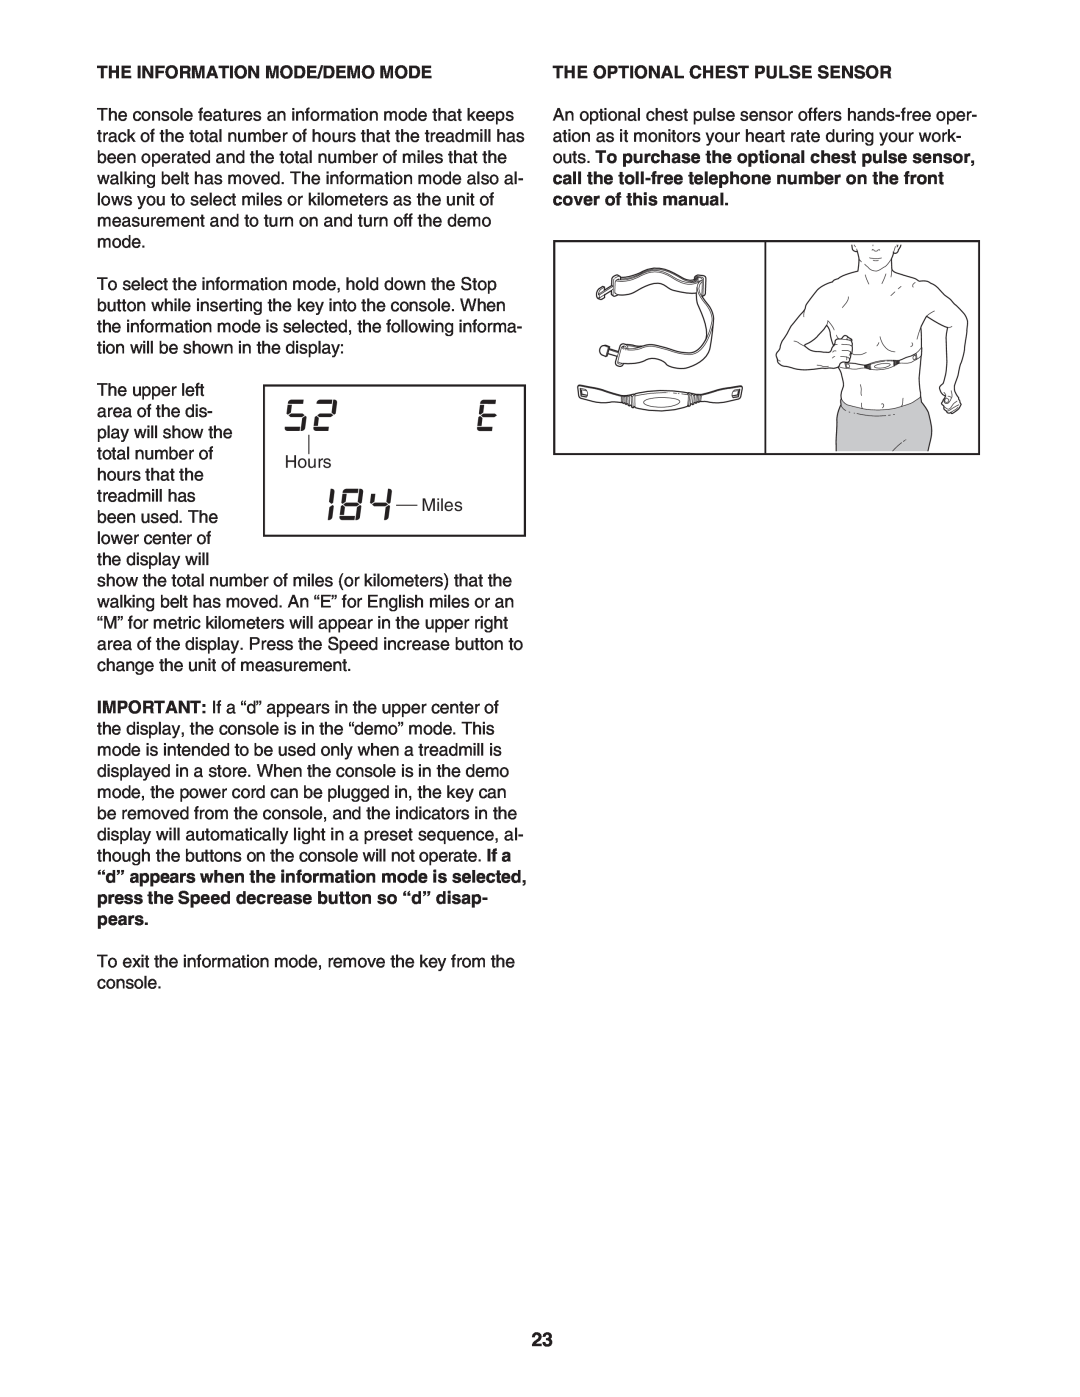 NordicTrack NTL1095.3 user manual The Information Mode/Demo Mode, The Optional Chest Pulse Sensor 